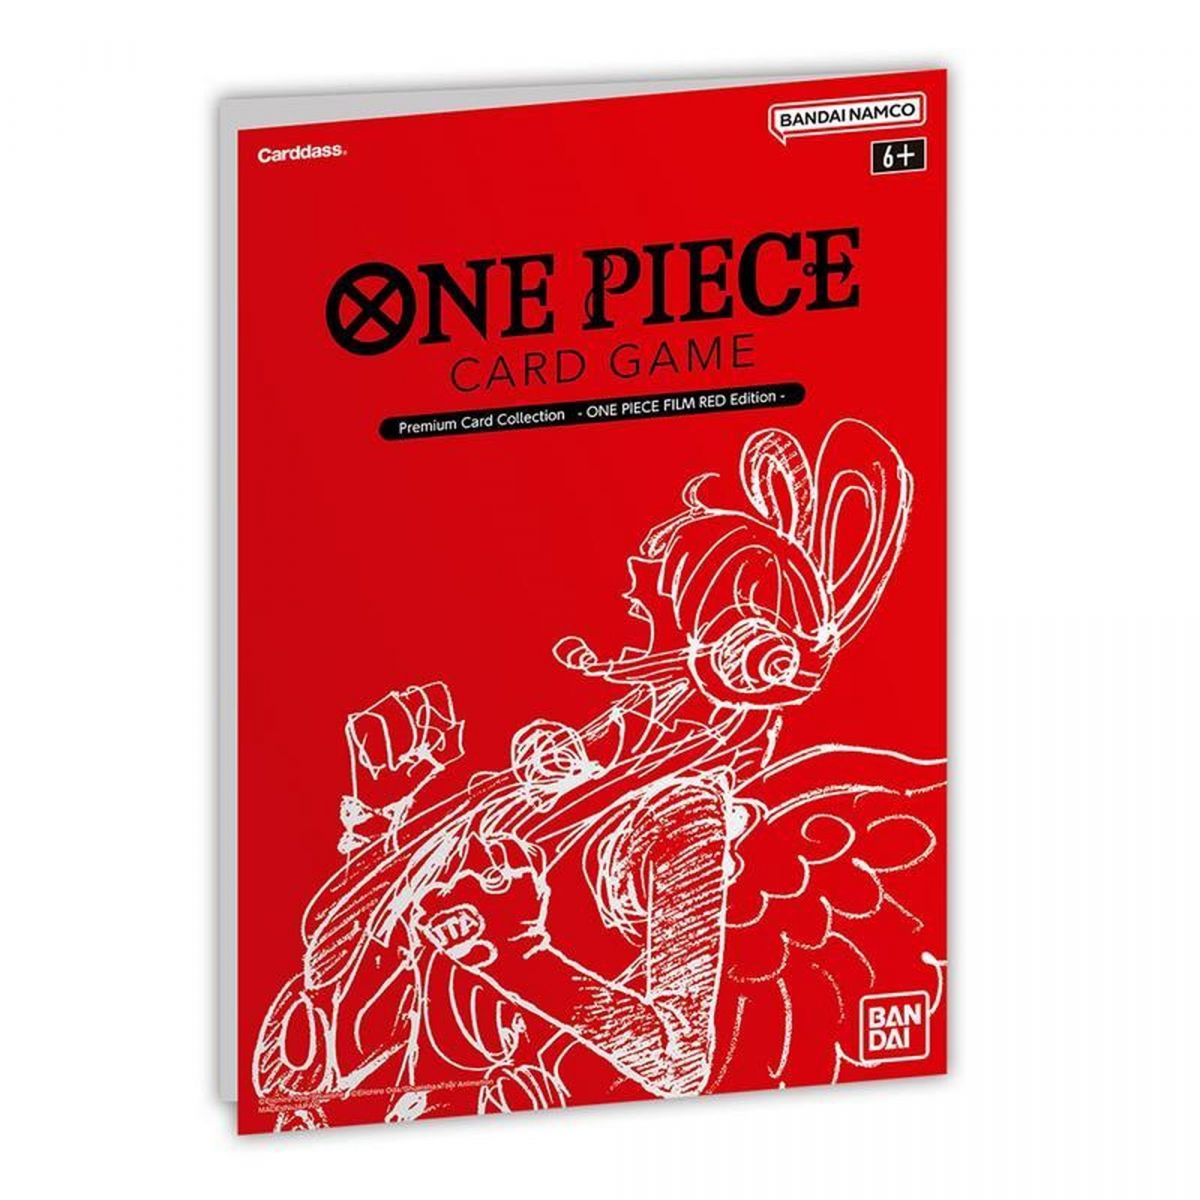 Item One Piece CG - Coffret - Premium Card Collection - Film Red Edition - EN